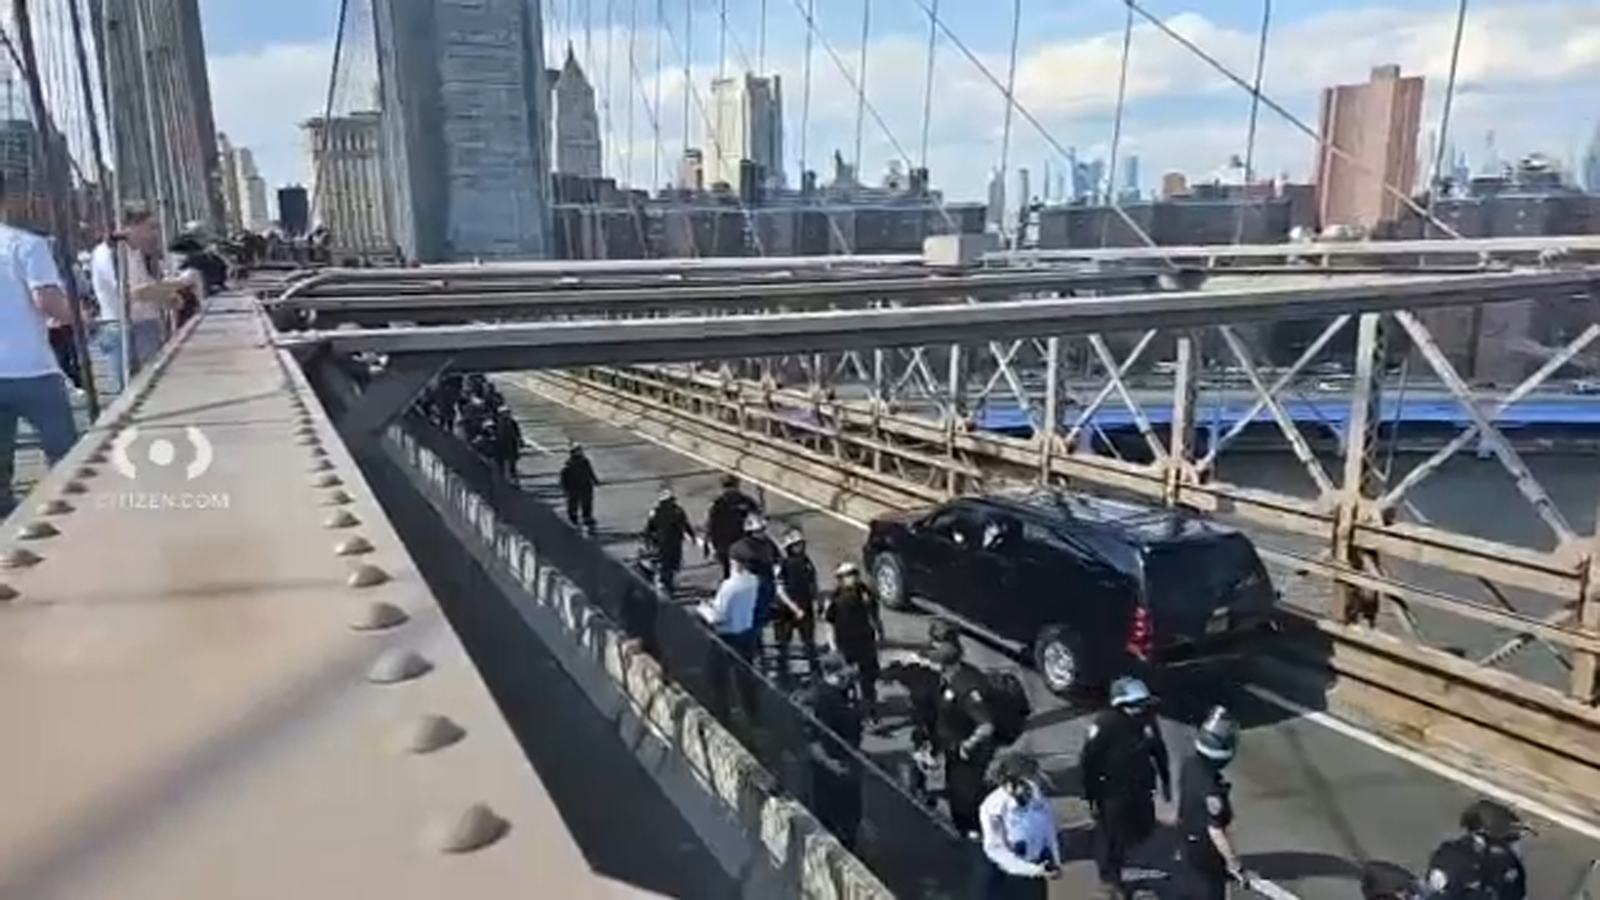 Pro-Palestinian demonstrators snarl traffic on Brooklyn Bridge after protesting on Wall Street [Video]